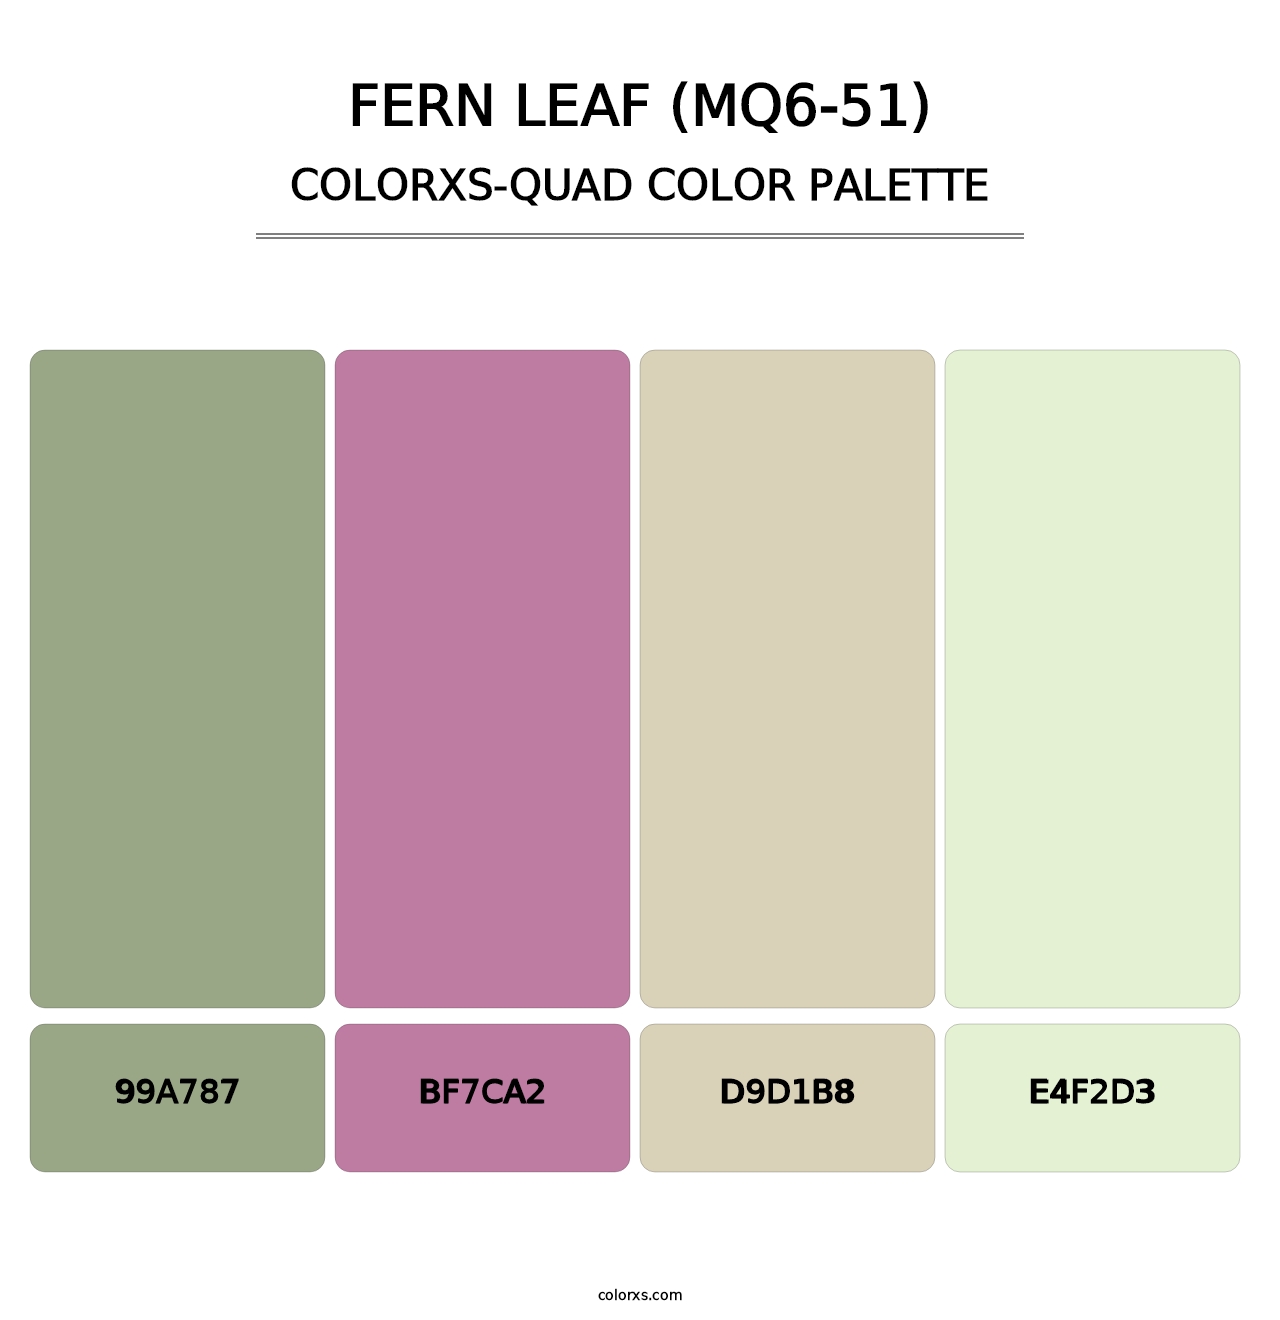 Fern Leaf (MQ6-51) - Colorxs Quad Palette